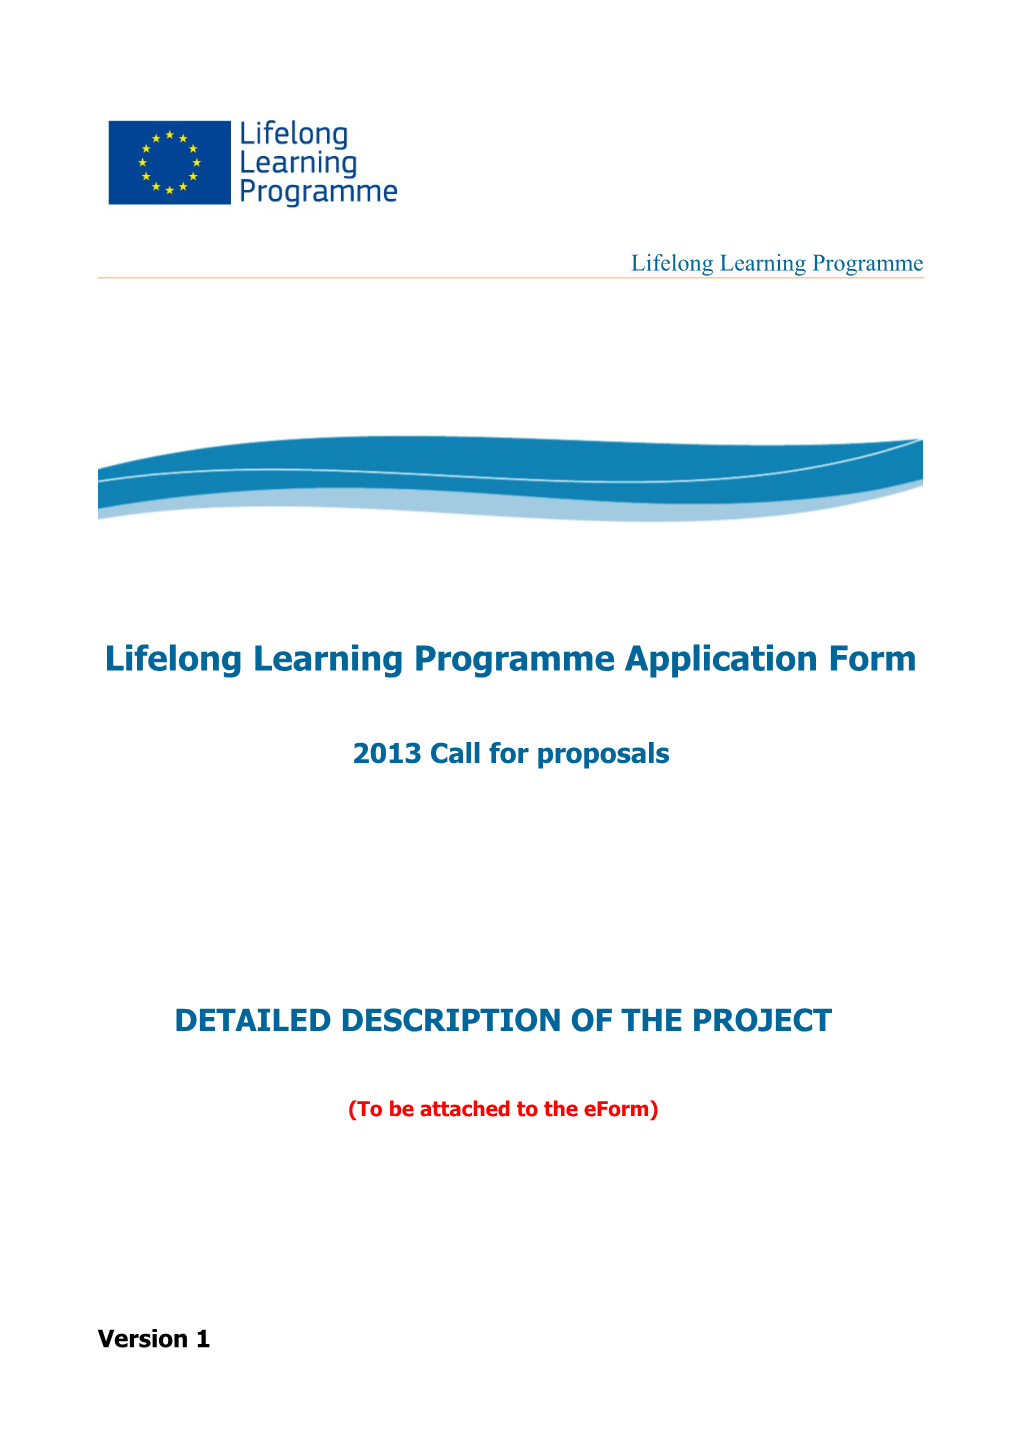 Lifelong Learning Programme Application Form